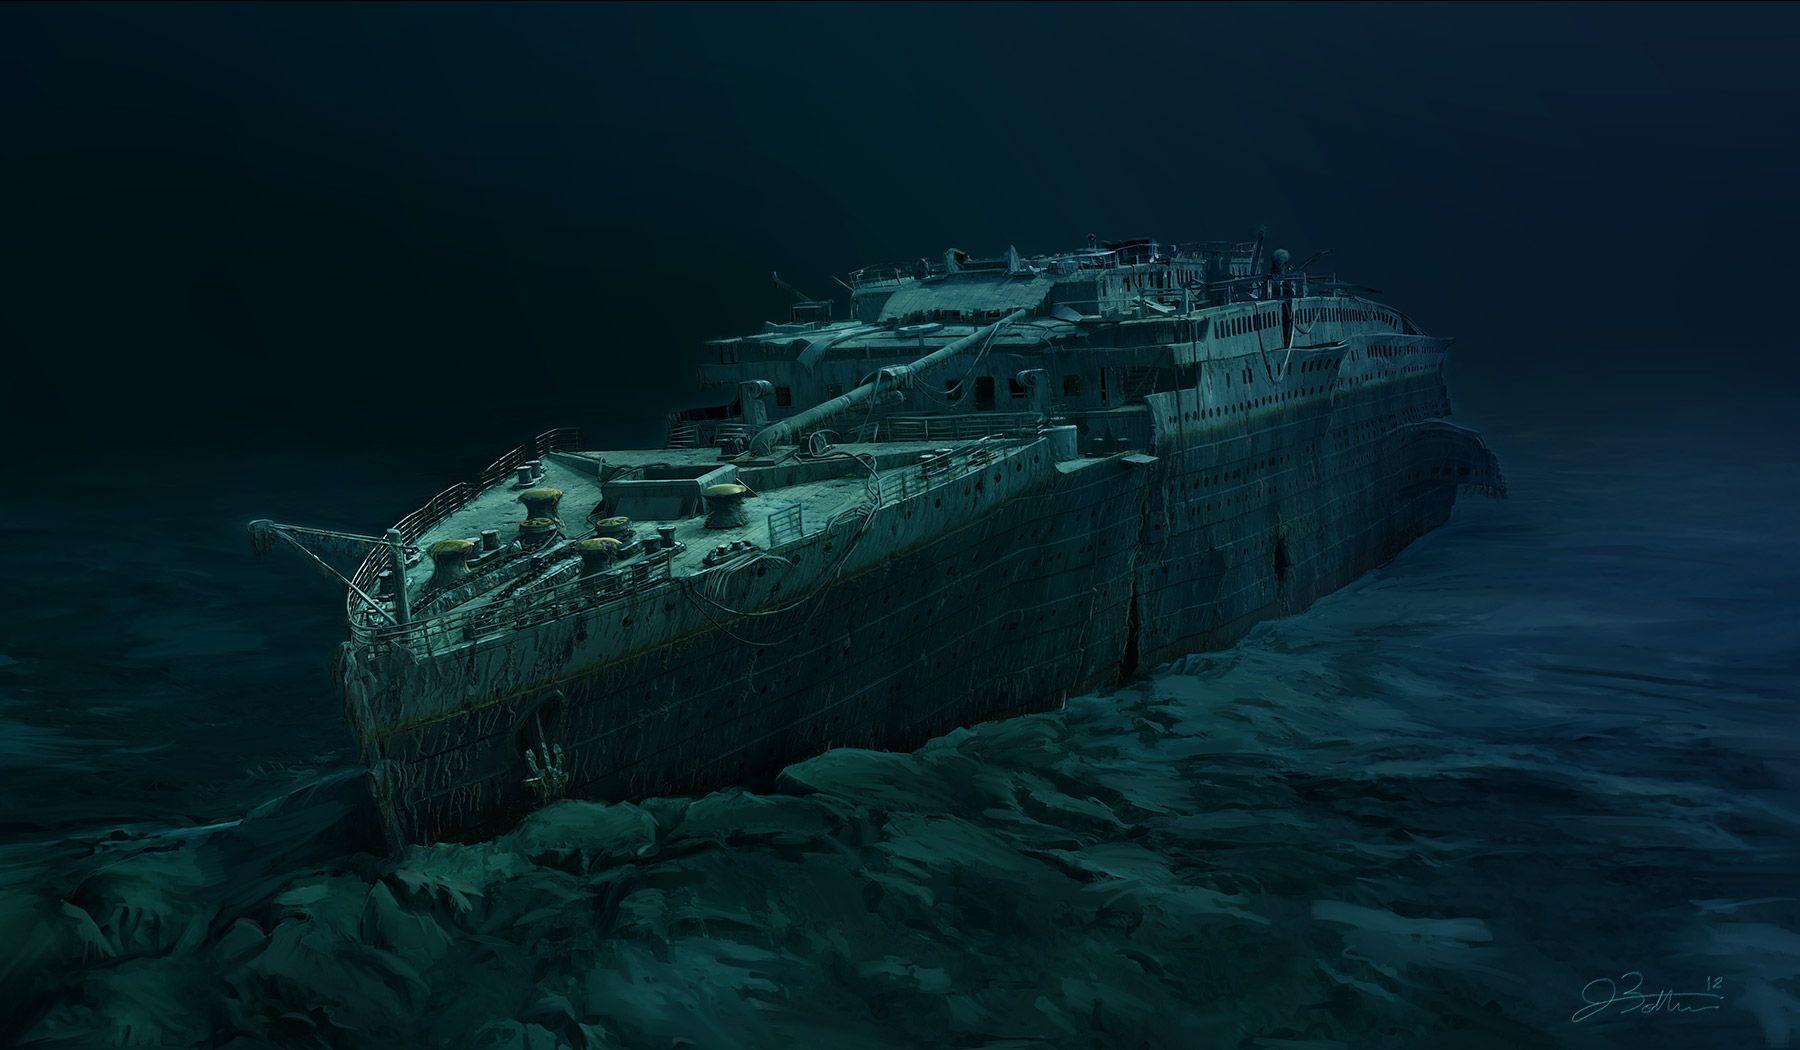 Titanic Remembered